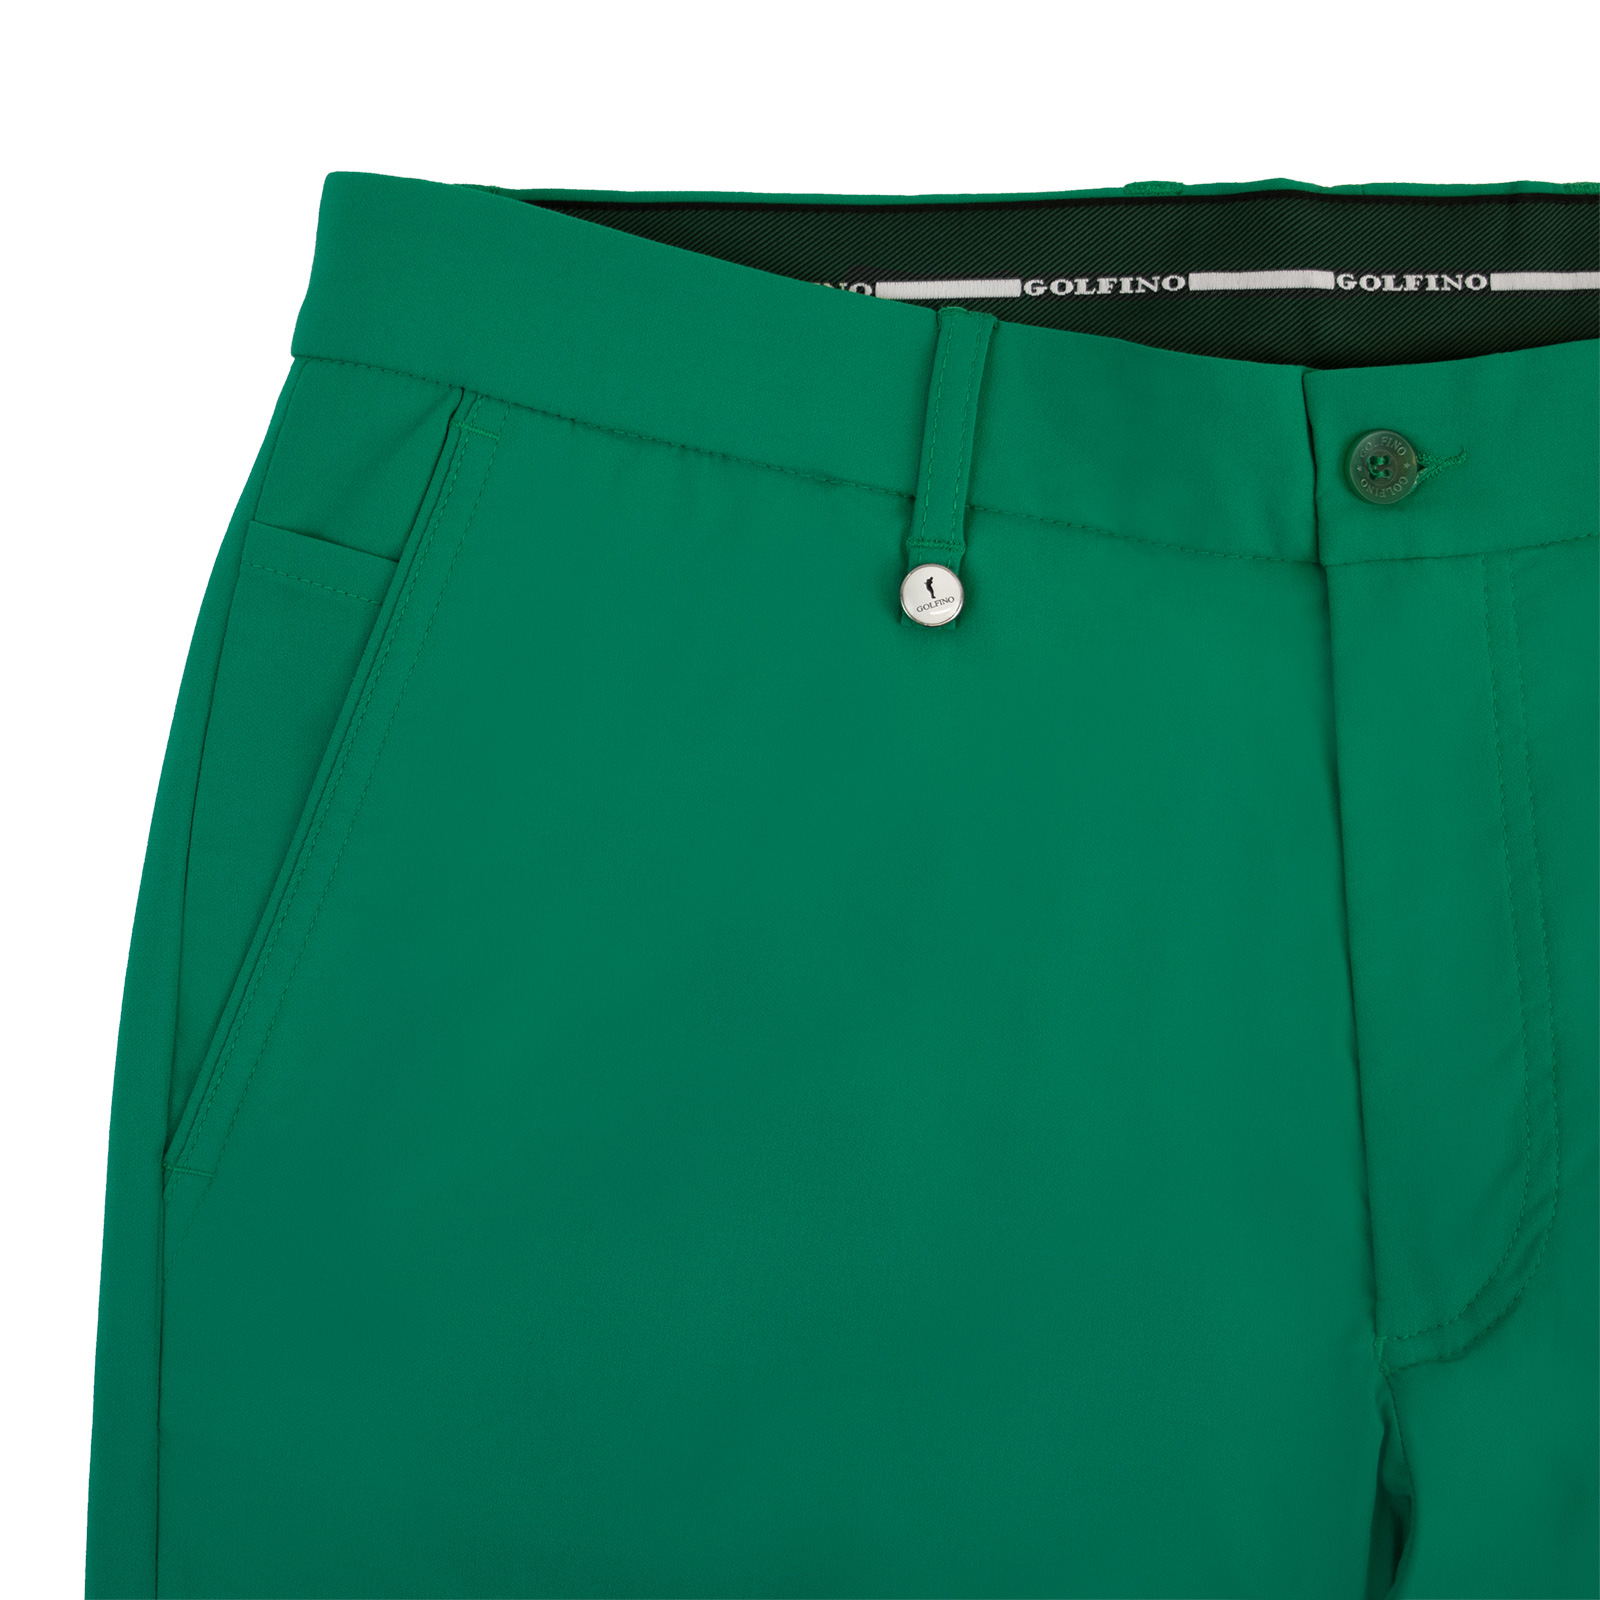 Fashionable men's golf trousers